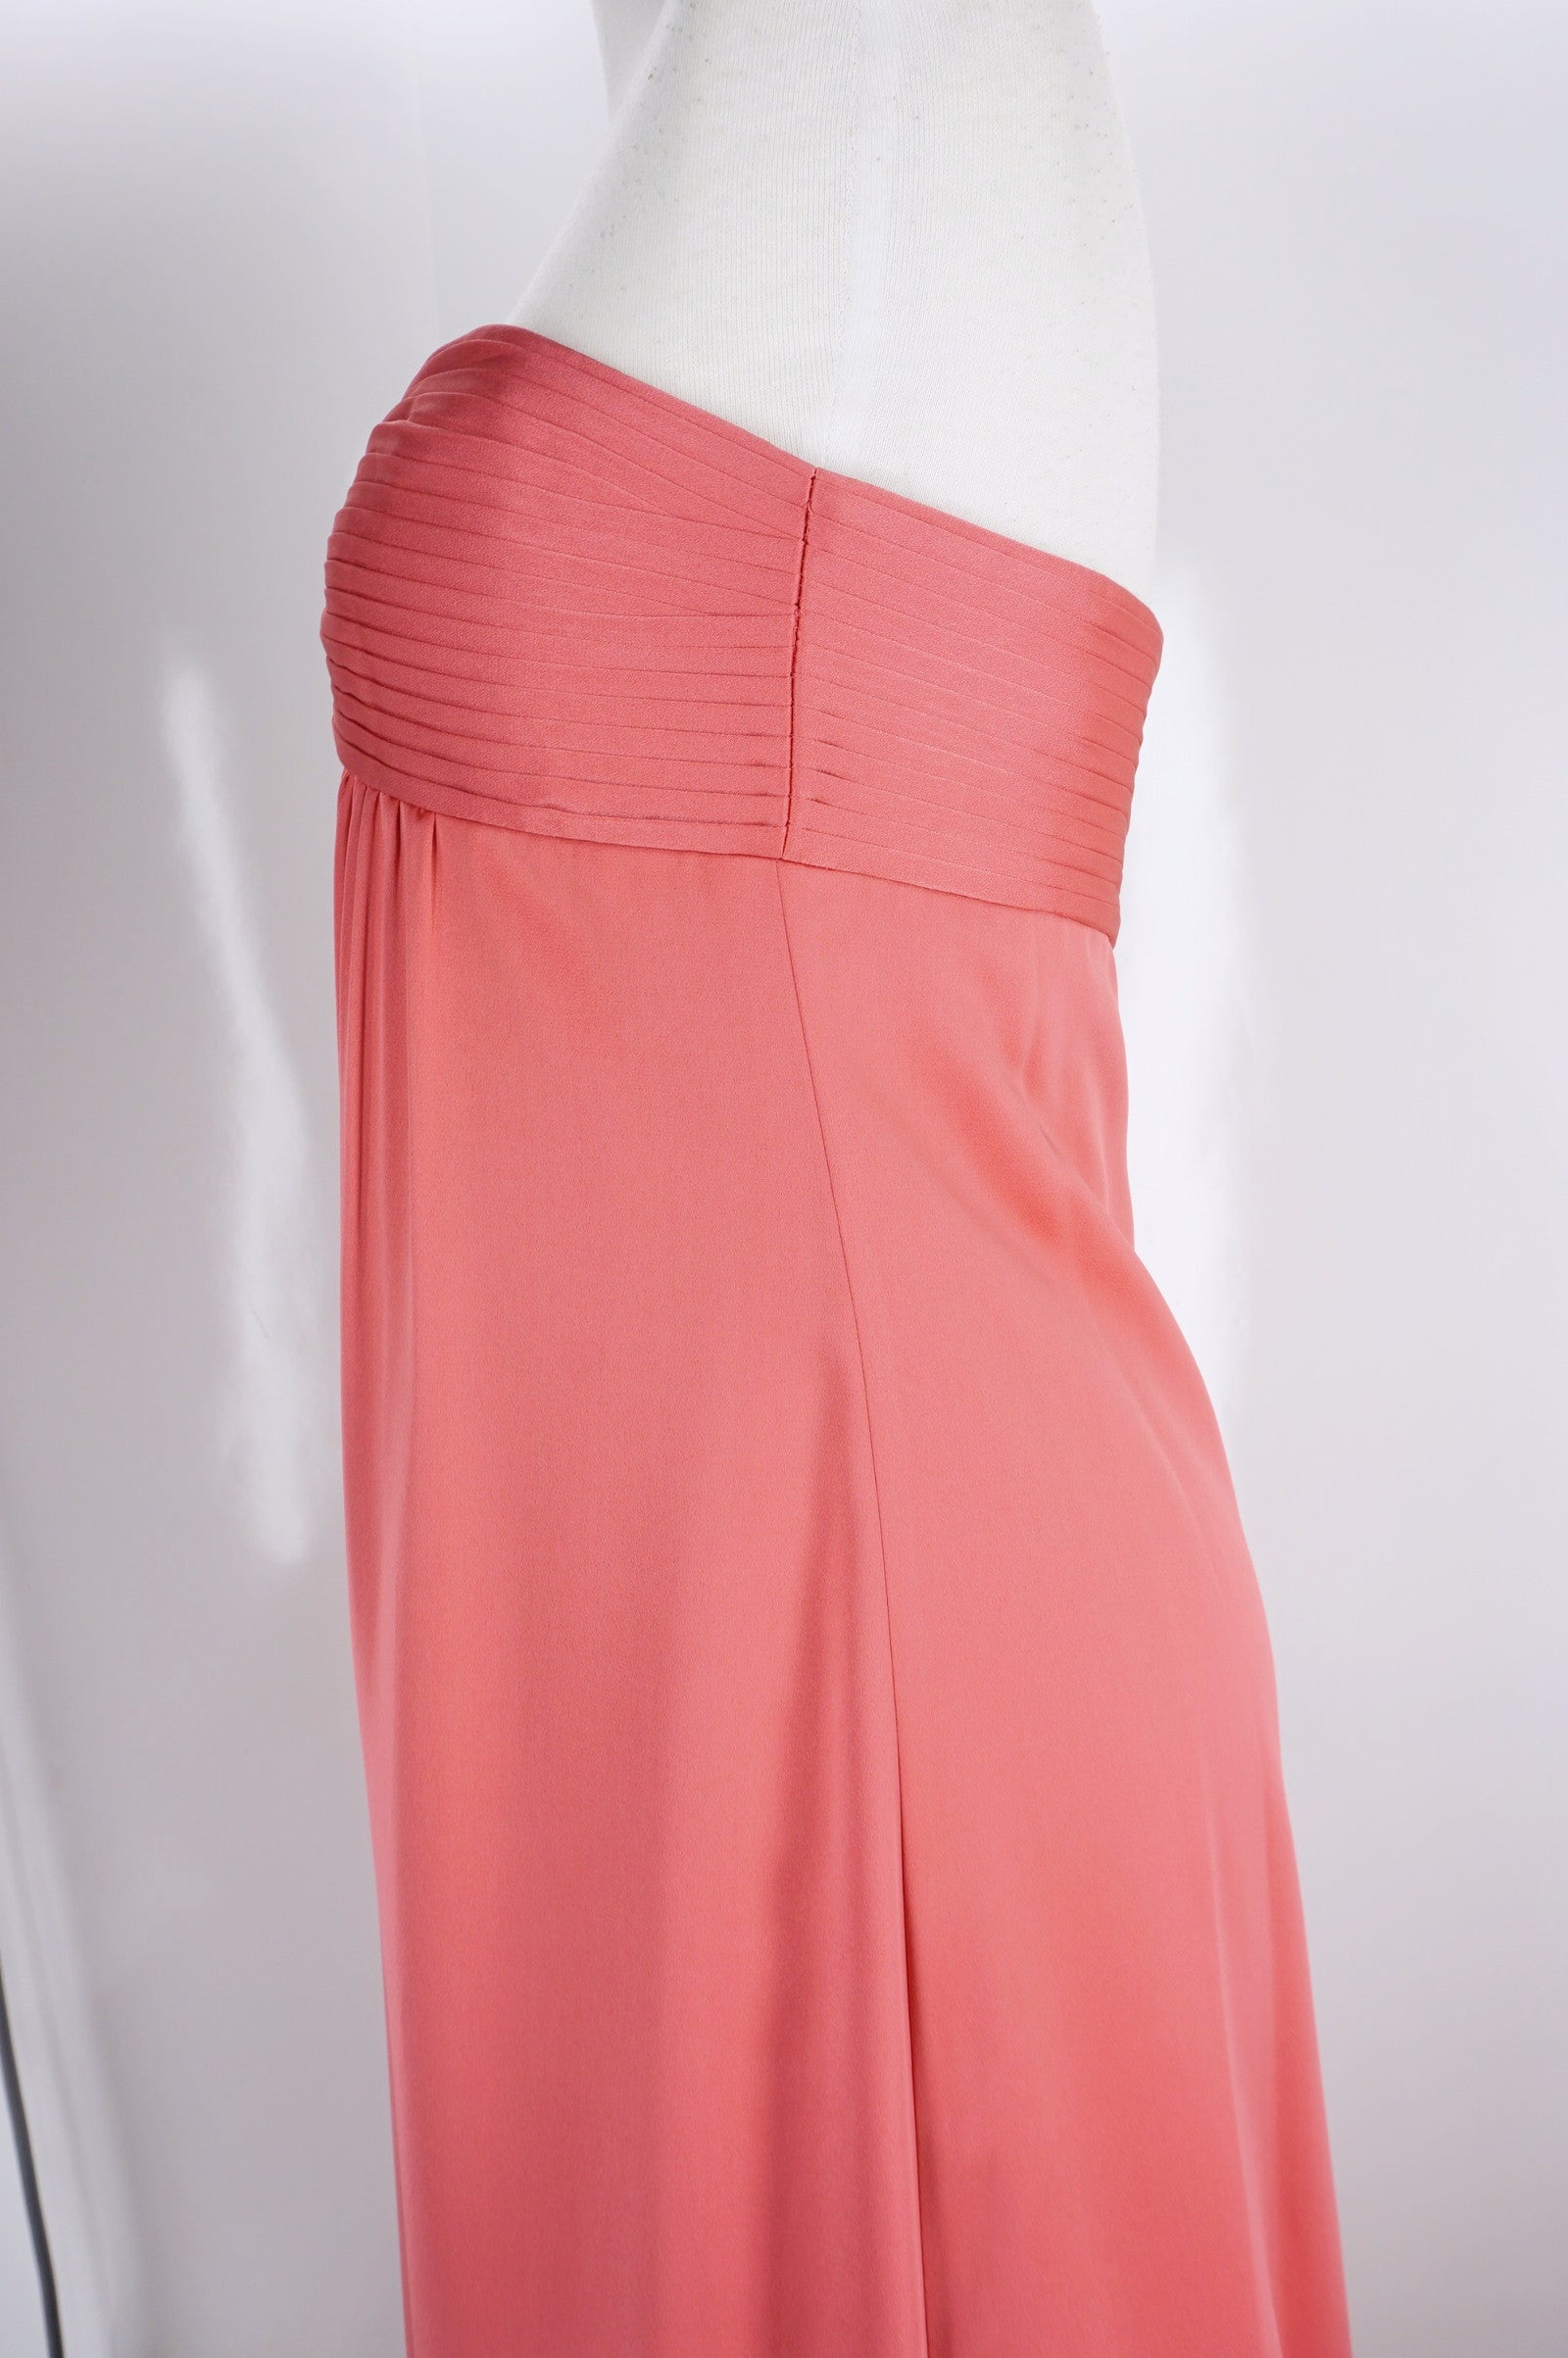 BCBG Maxazria Watermelon Pink Woven Silk Strapless Dress size 4 NWT $$288